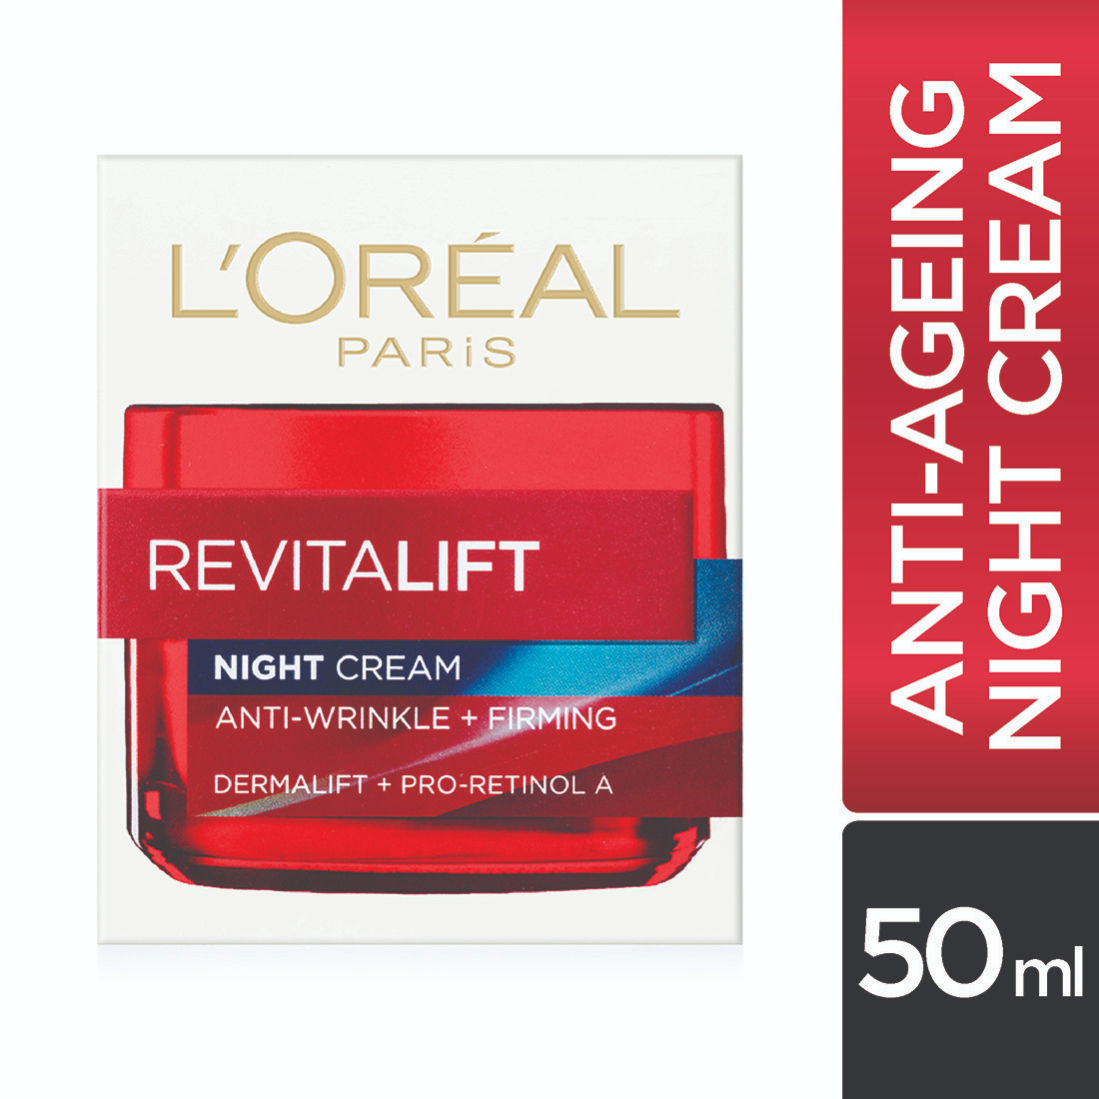 L'Oreal Paris Revitalift Anti-Wrinkle And Firming Night Cream